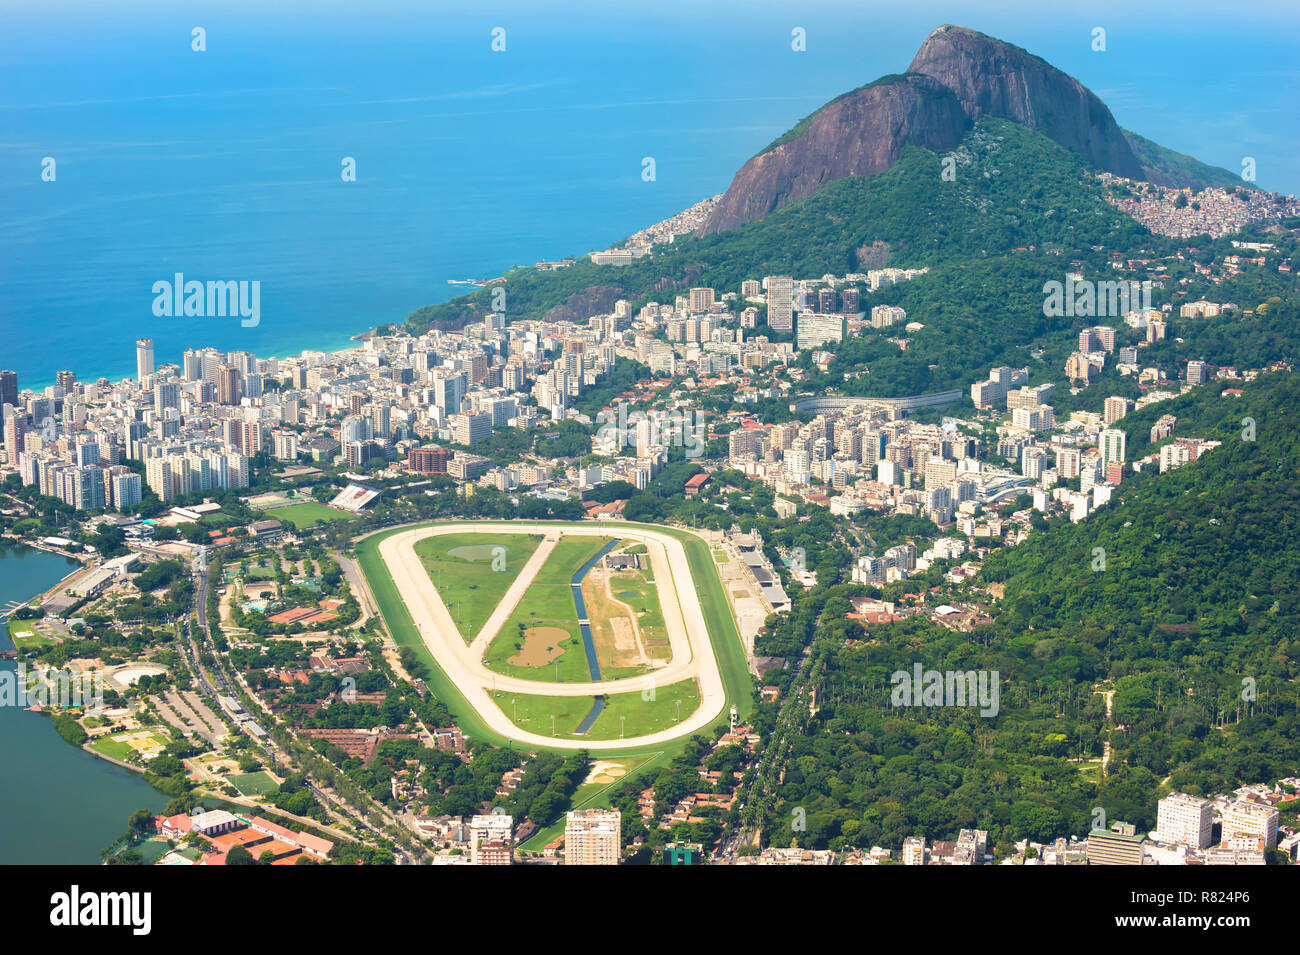 View from the Corcovado over Ipanema, Leblon and the Jockey Club, Ipanema, Leblon, Rio de Janeiro, Rio de Janeiro State, Brazil Stock Photo